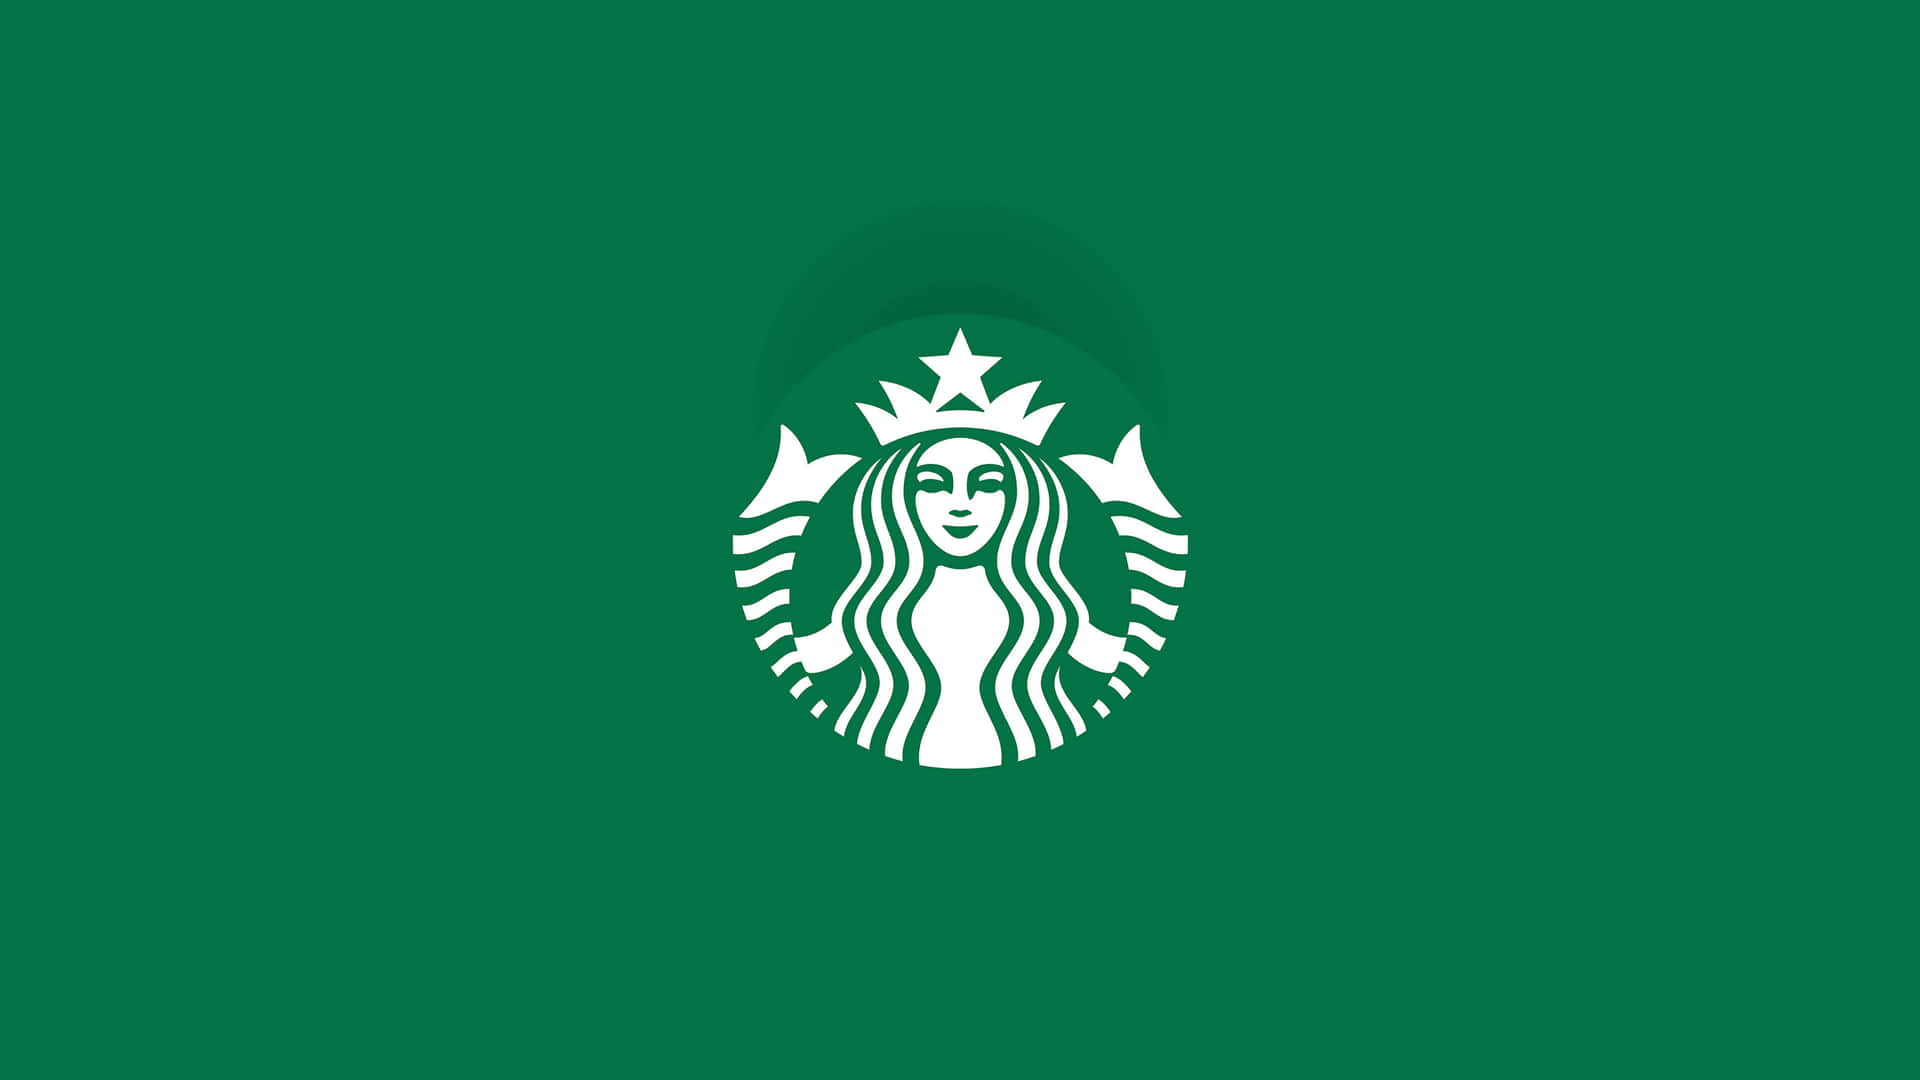 Starbuckslogotyp På Grön Bakgrund